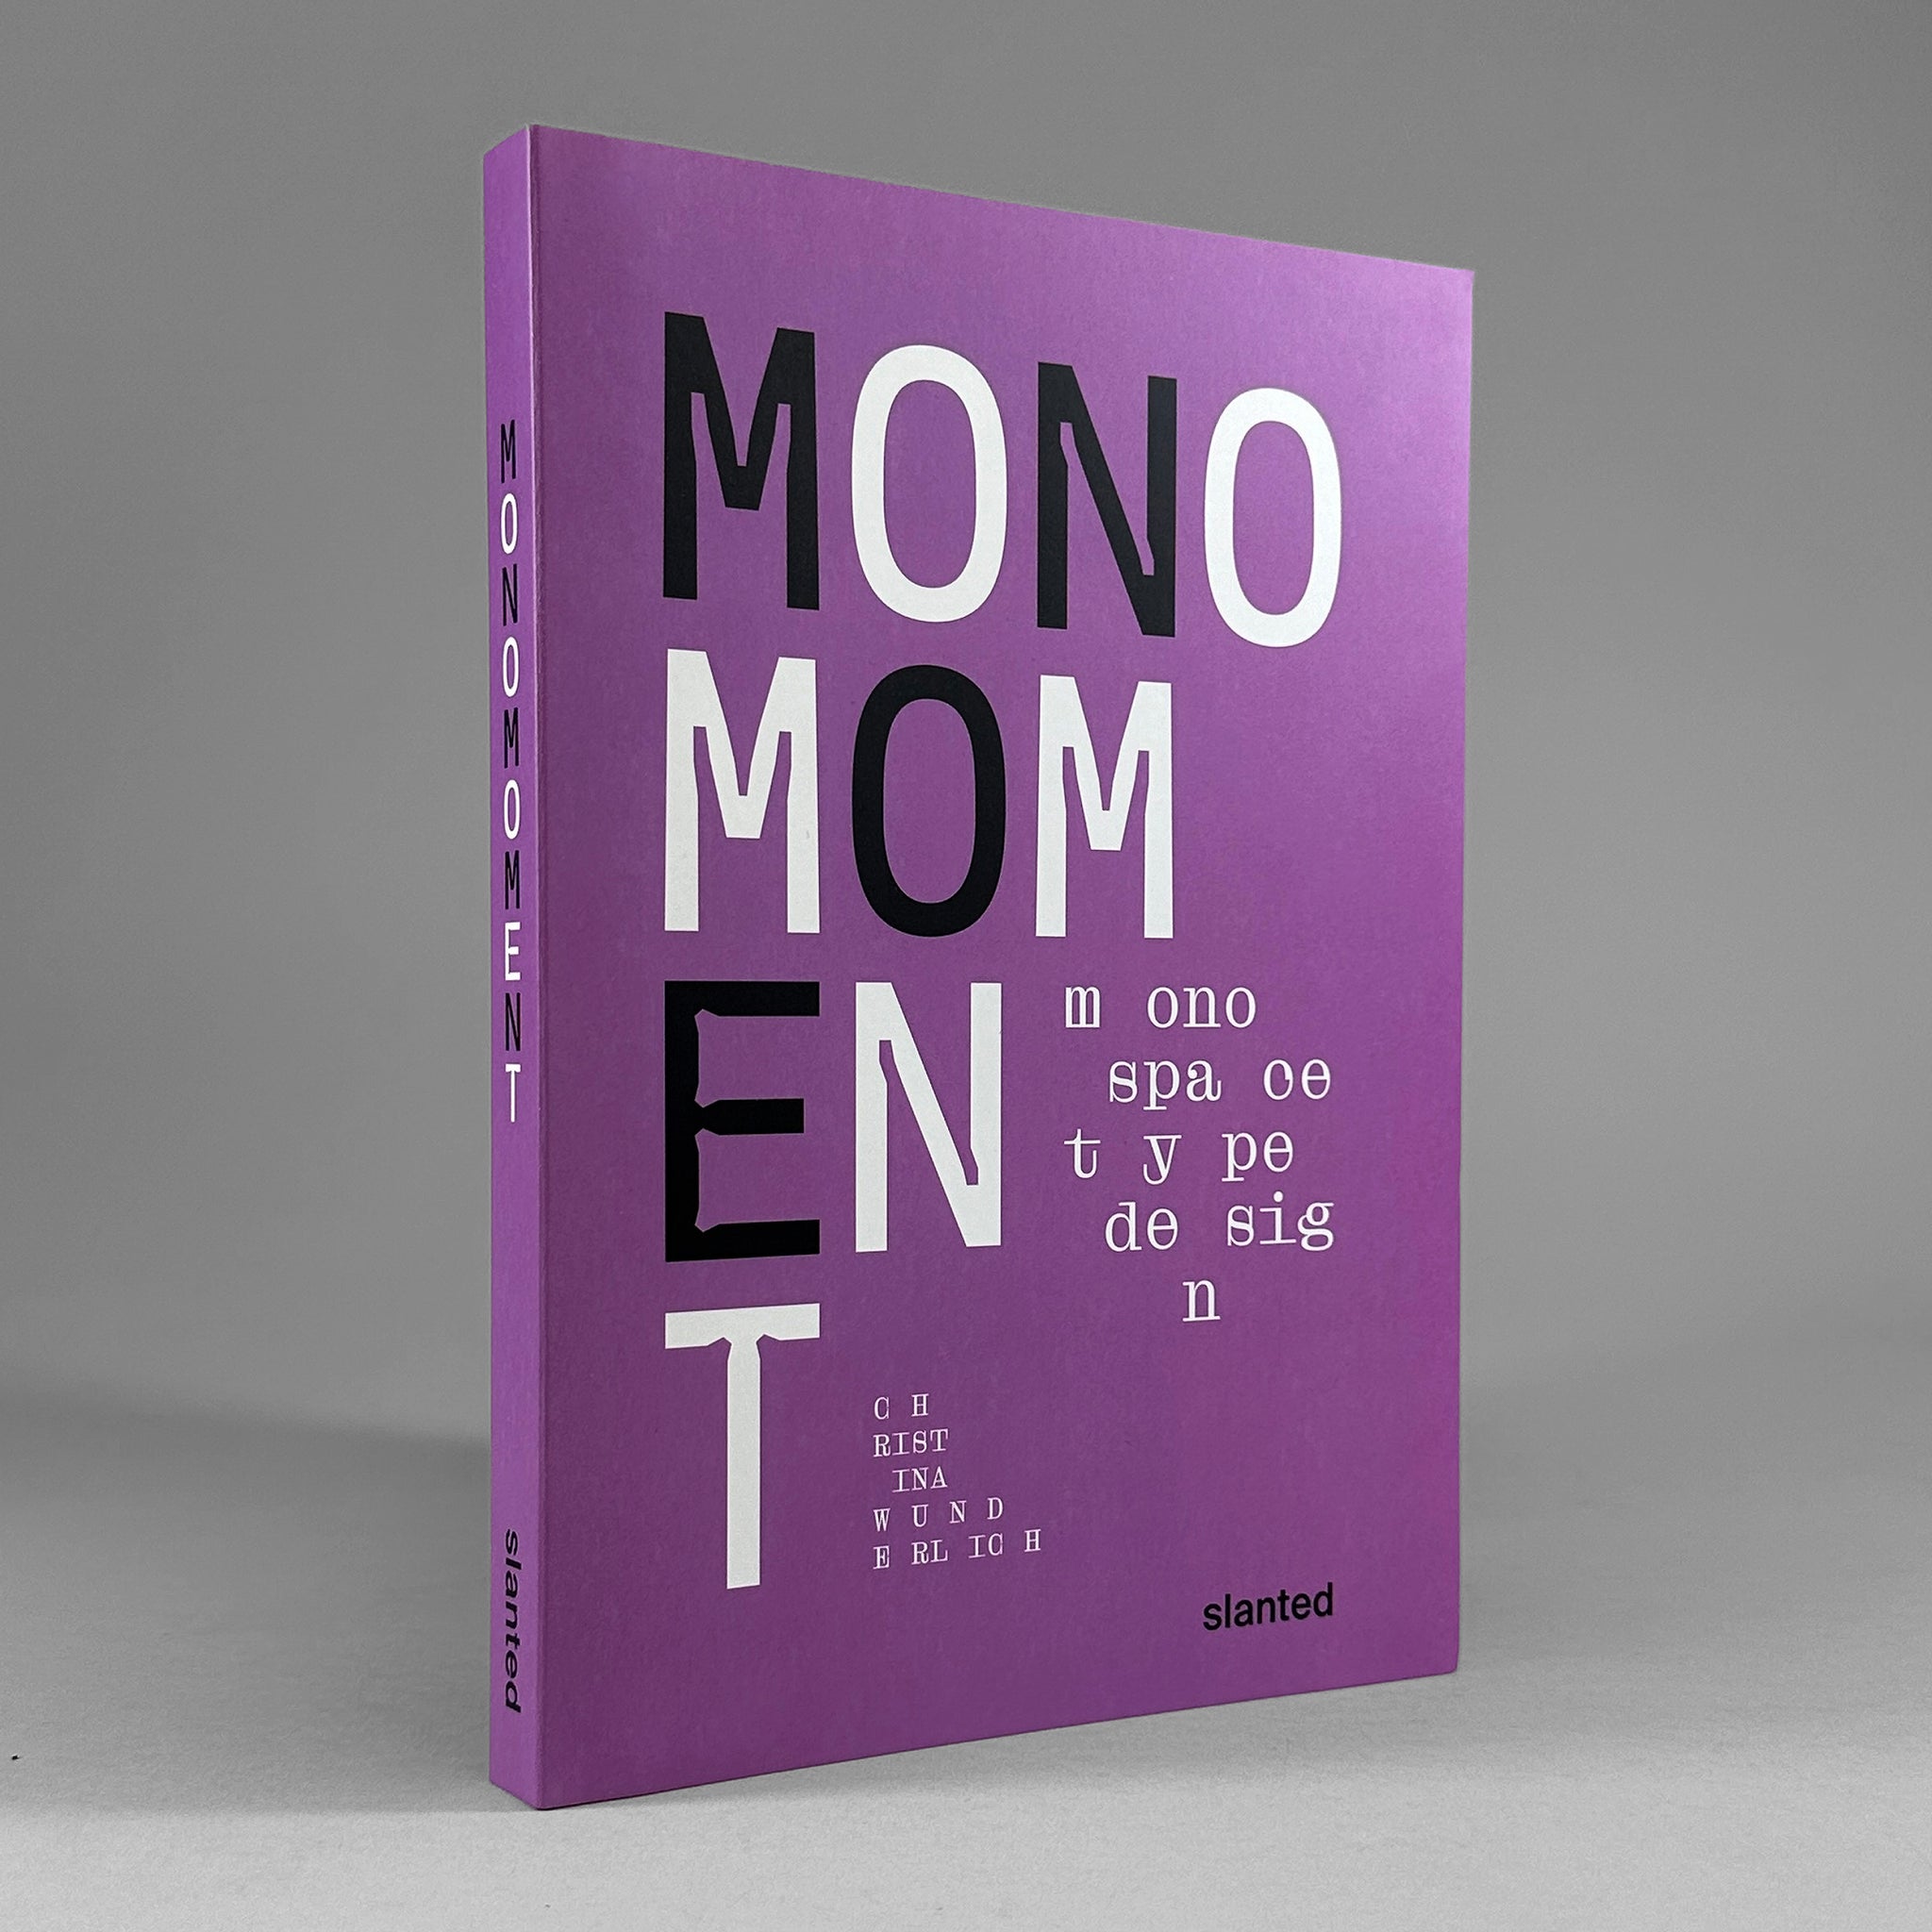 Mono Moment: Monospace Type Design